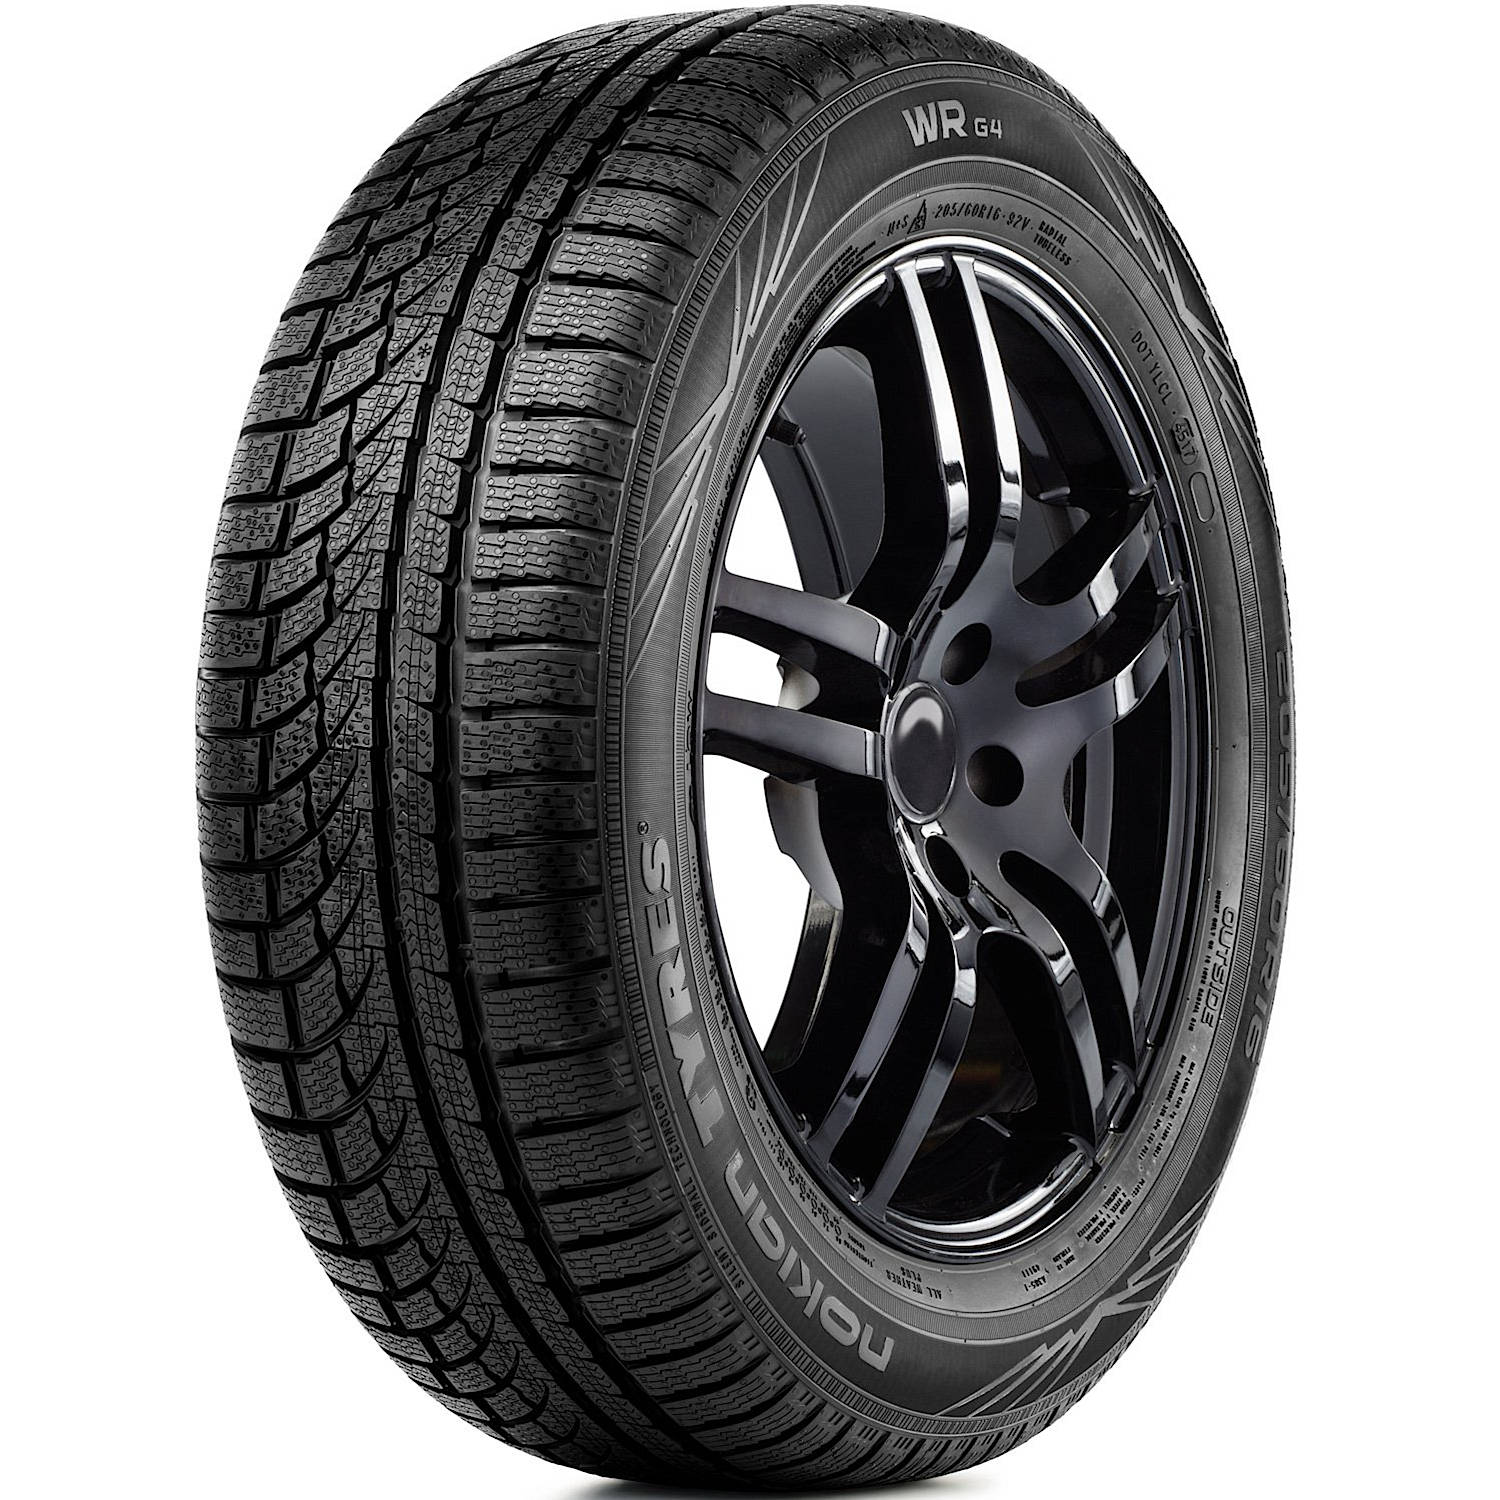 NOKIAN WR G4 215/60R16 (26.1X8.5R 16) Tires